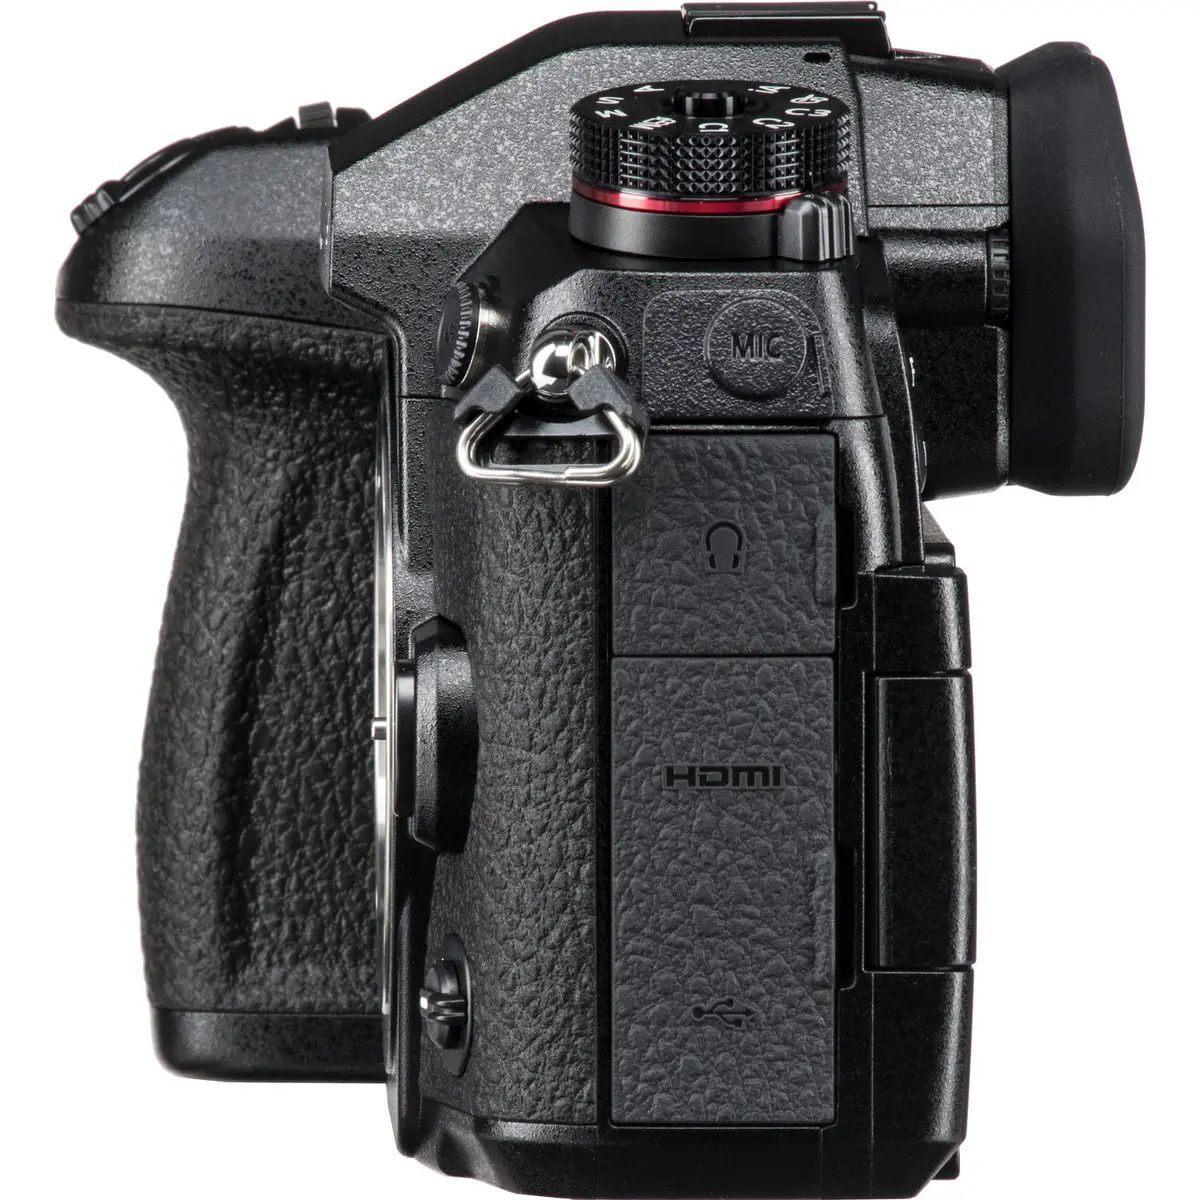 6. Panasonic Lumix DC-G9 Body Camera